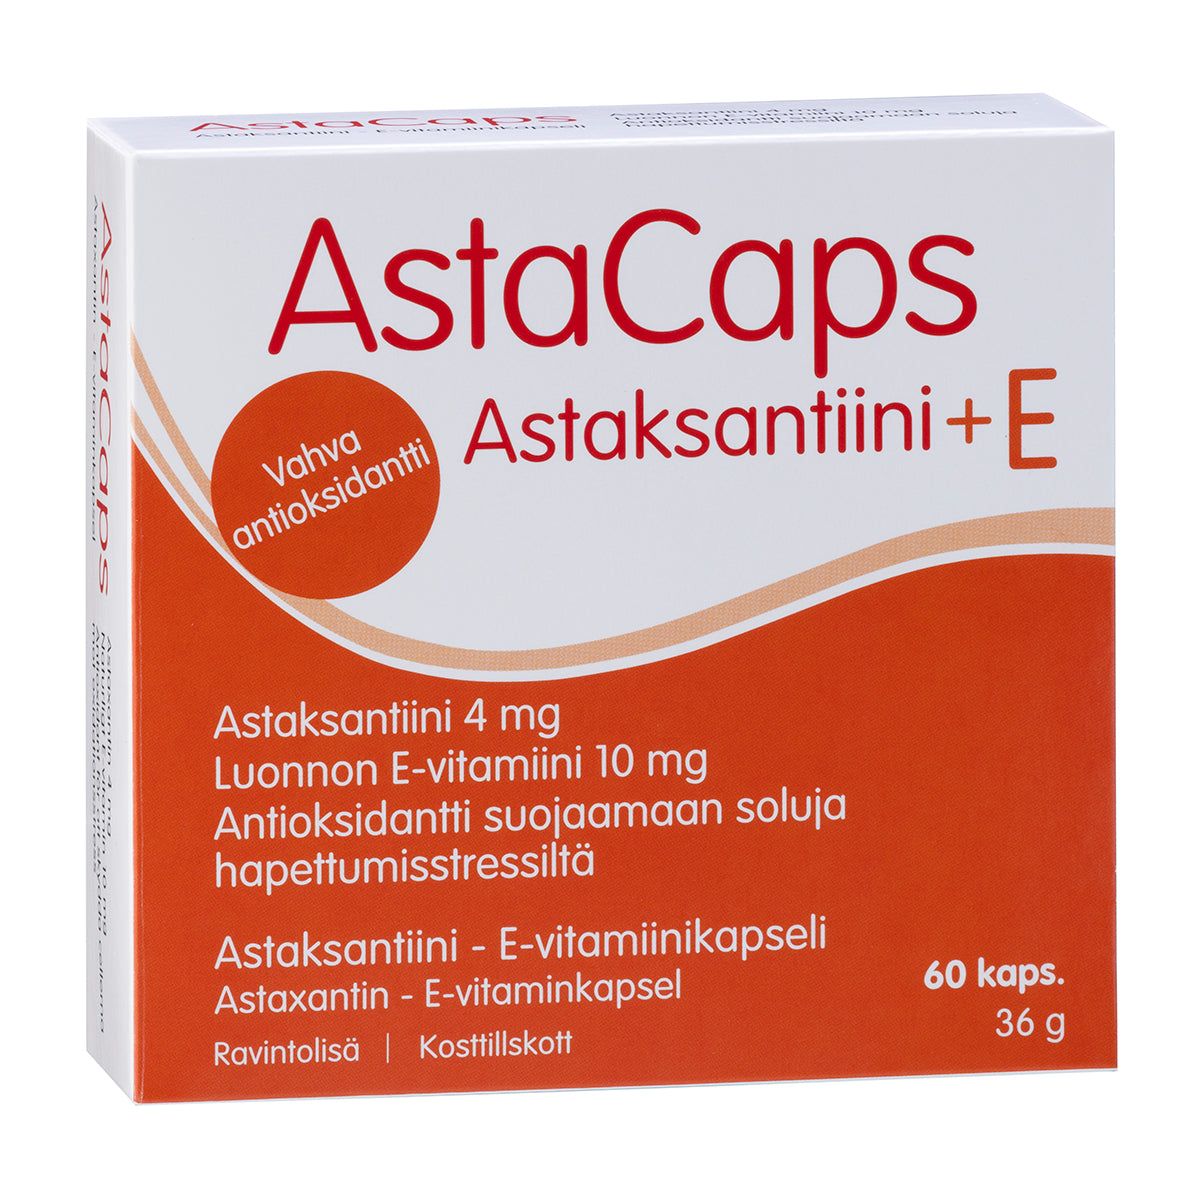 AstaCaps Astaksantiini + E-vitamiini 60 kaps